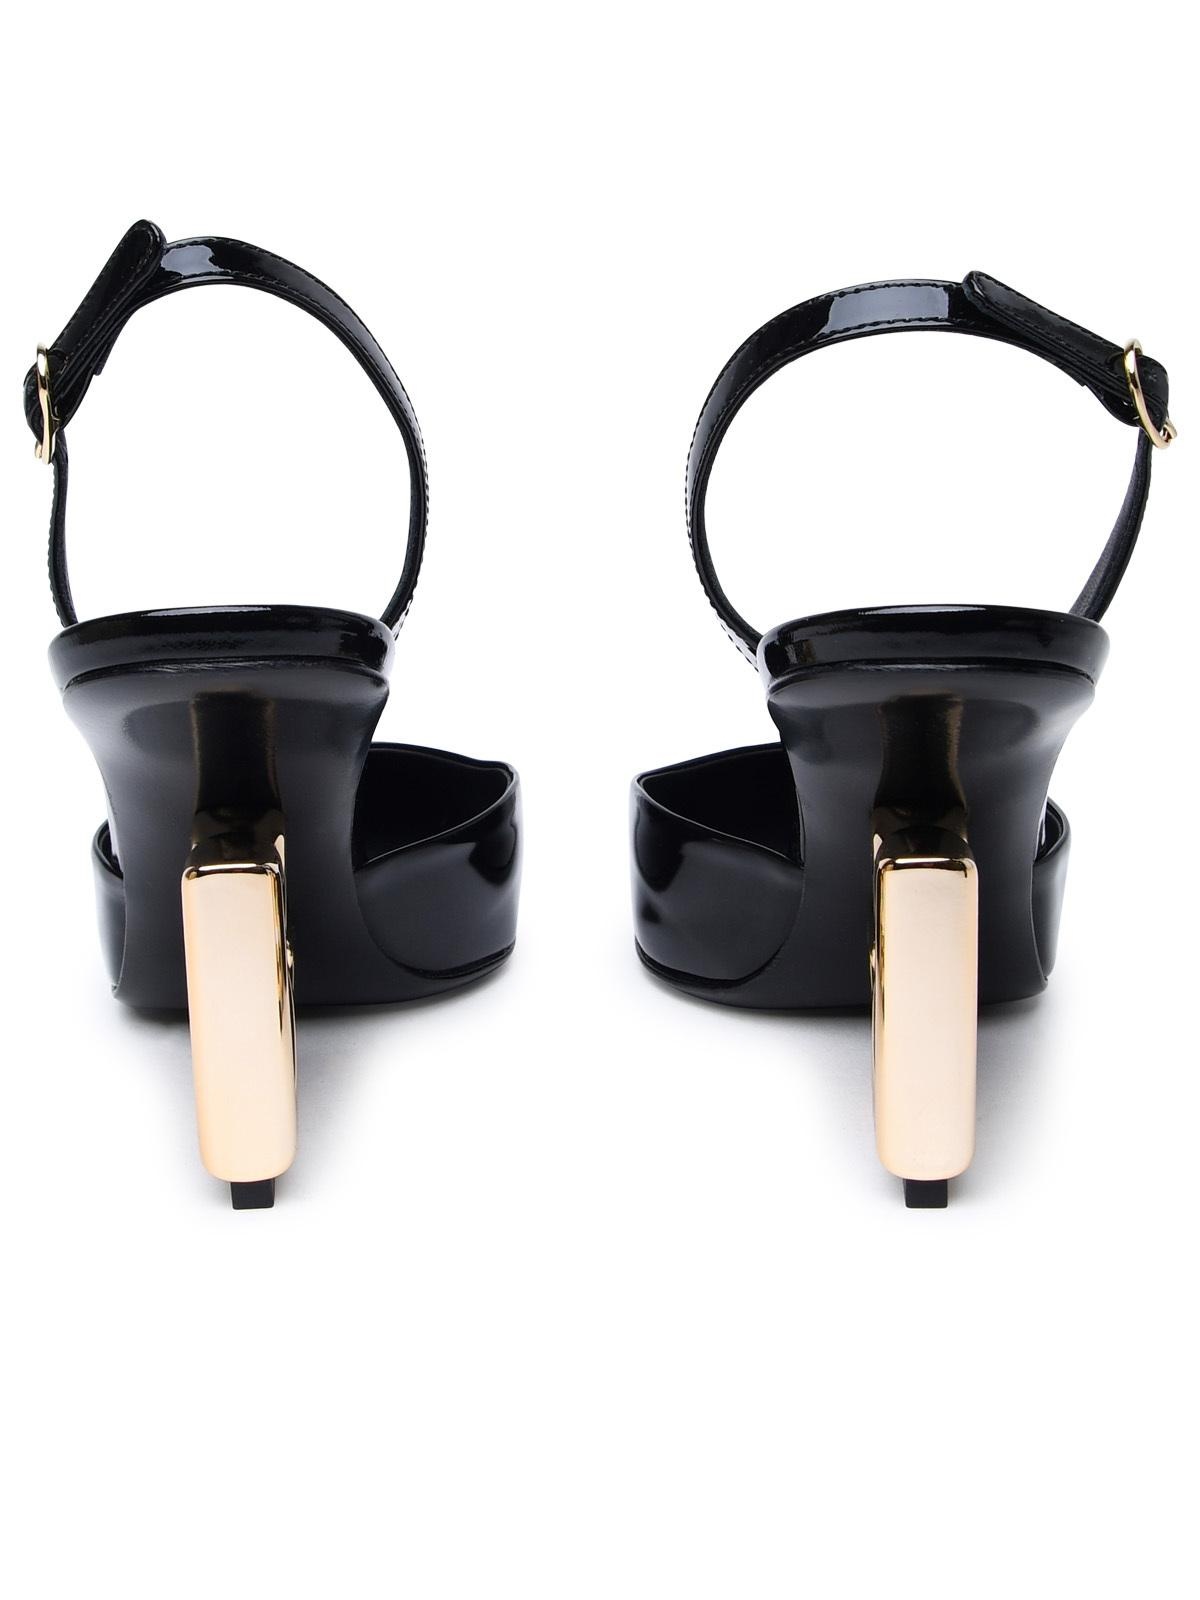 Dolce & Gabbana Black Patent Leather Pumps Woman - 4